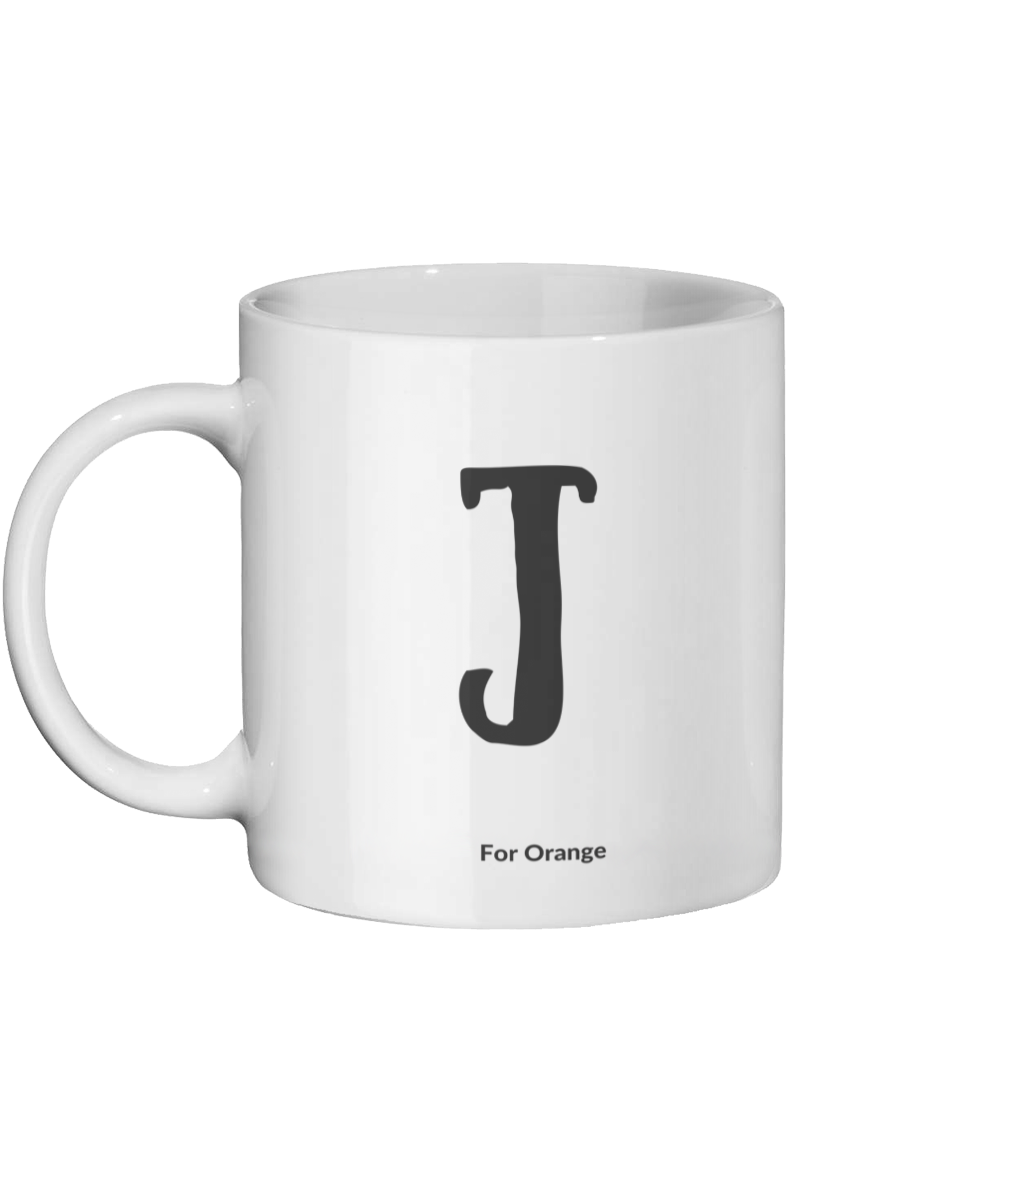 J For Orange Mug